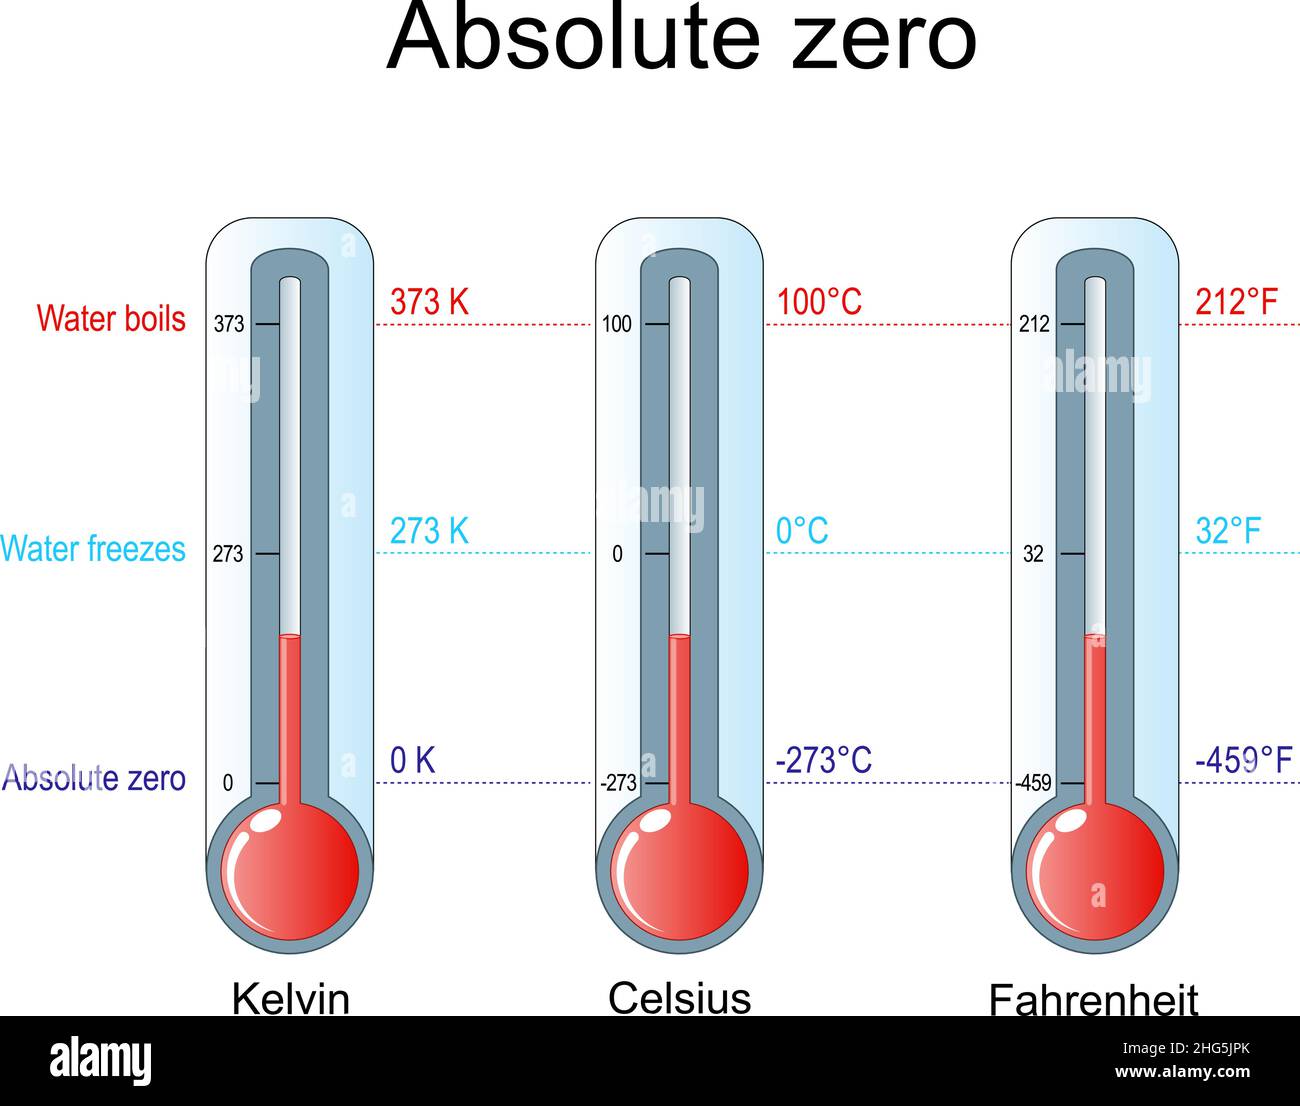 Escala absoluta de temperatura fotografías e imágenes de alta resolución -  Alamy